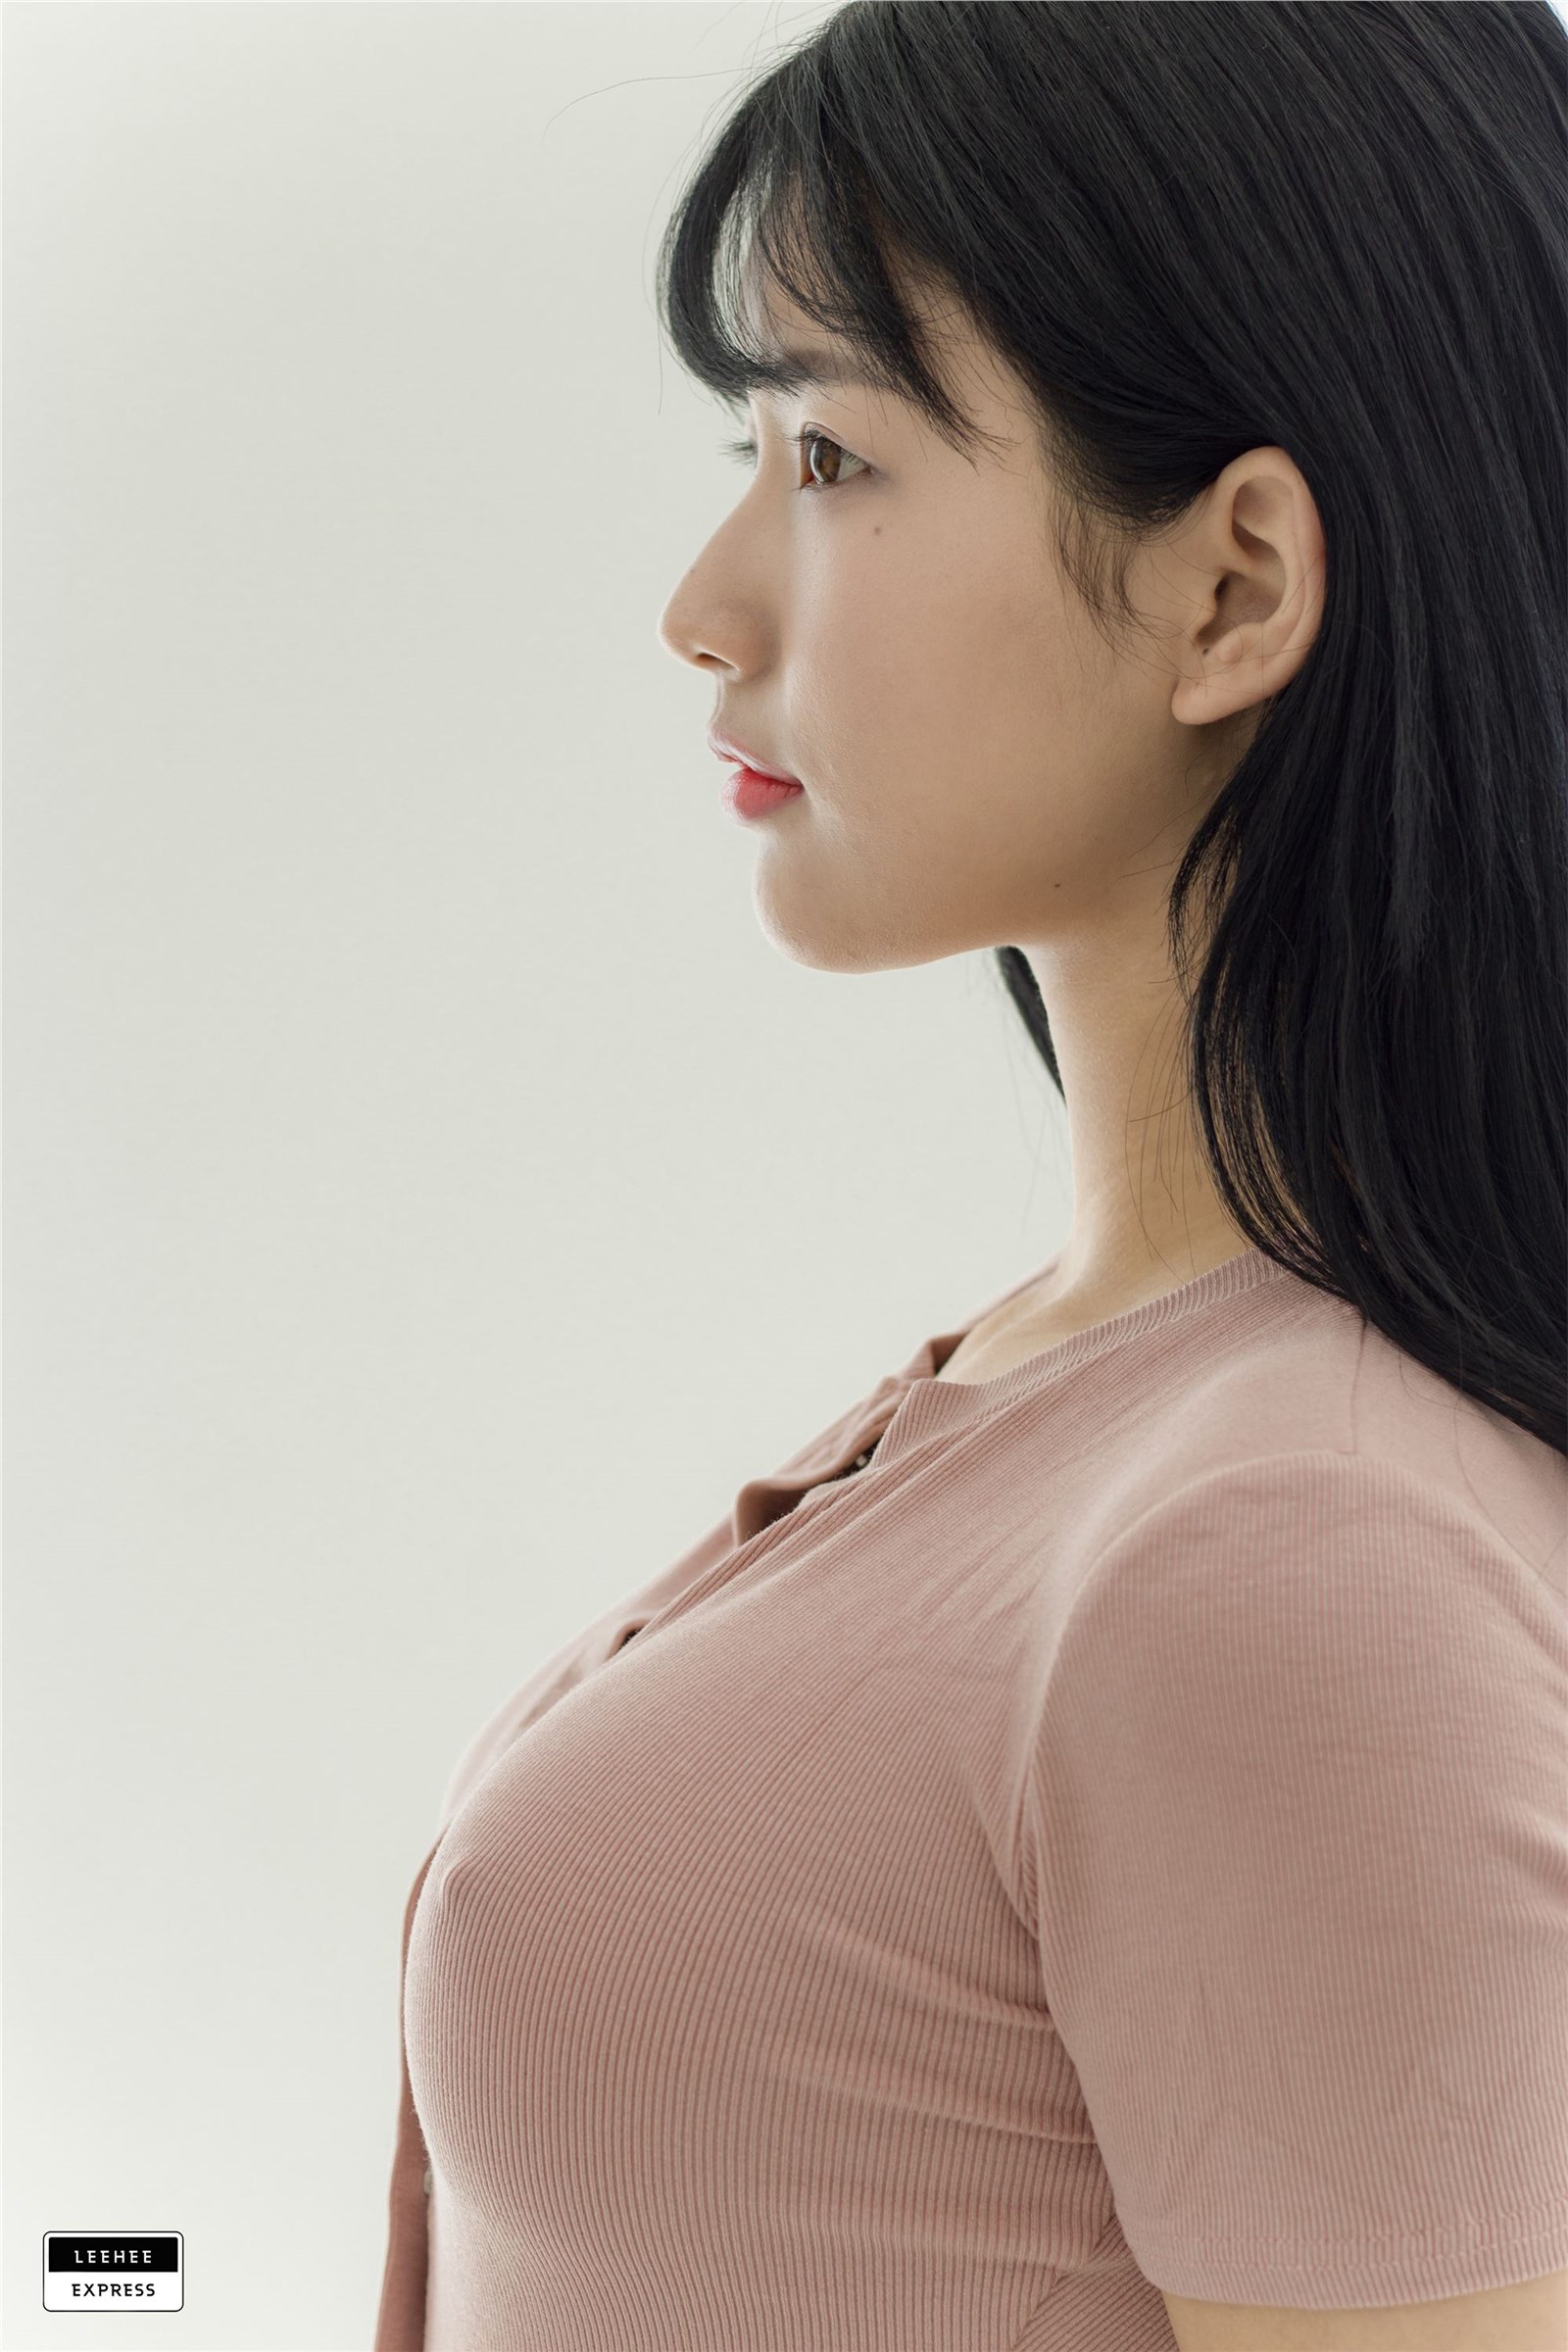 South Korea's sister(40)